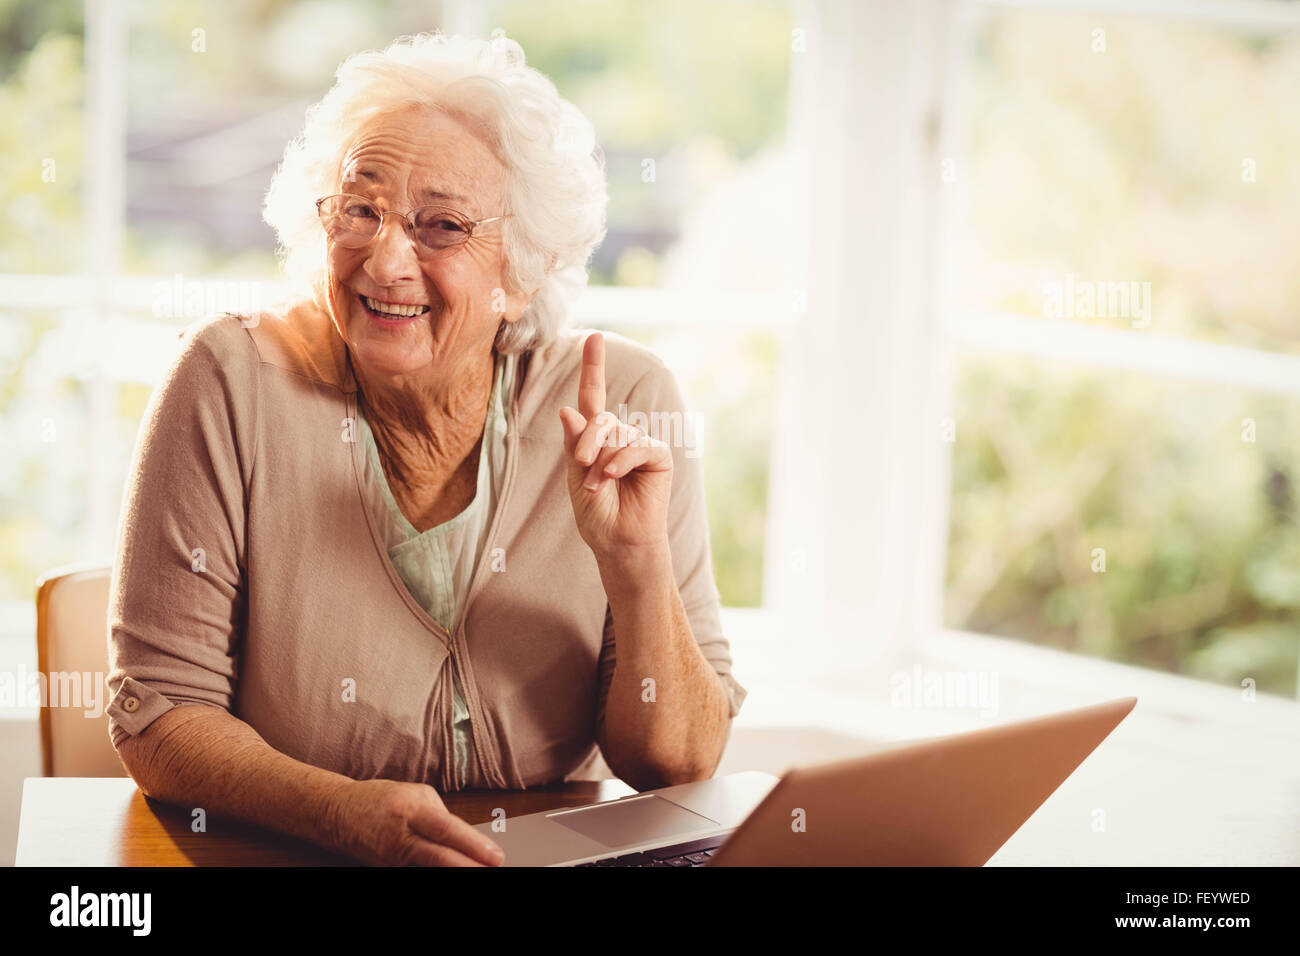 Smiling senior woman raising finger using laptop Stock Photo